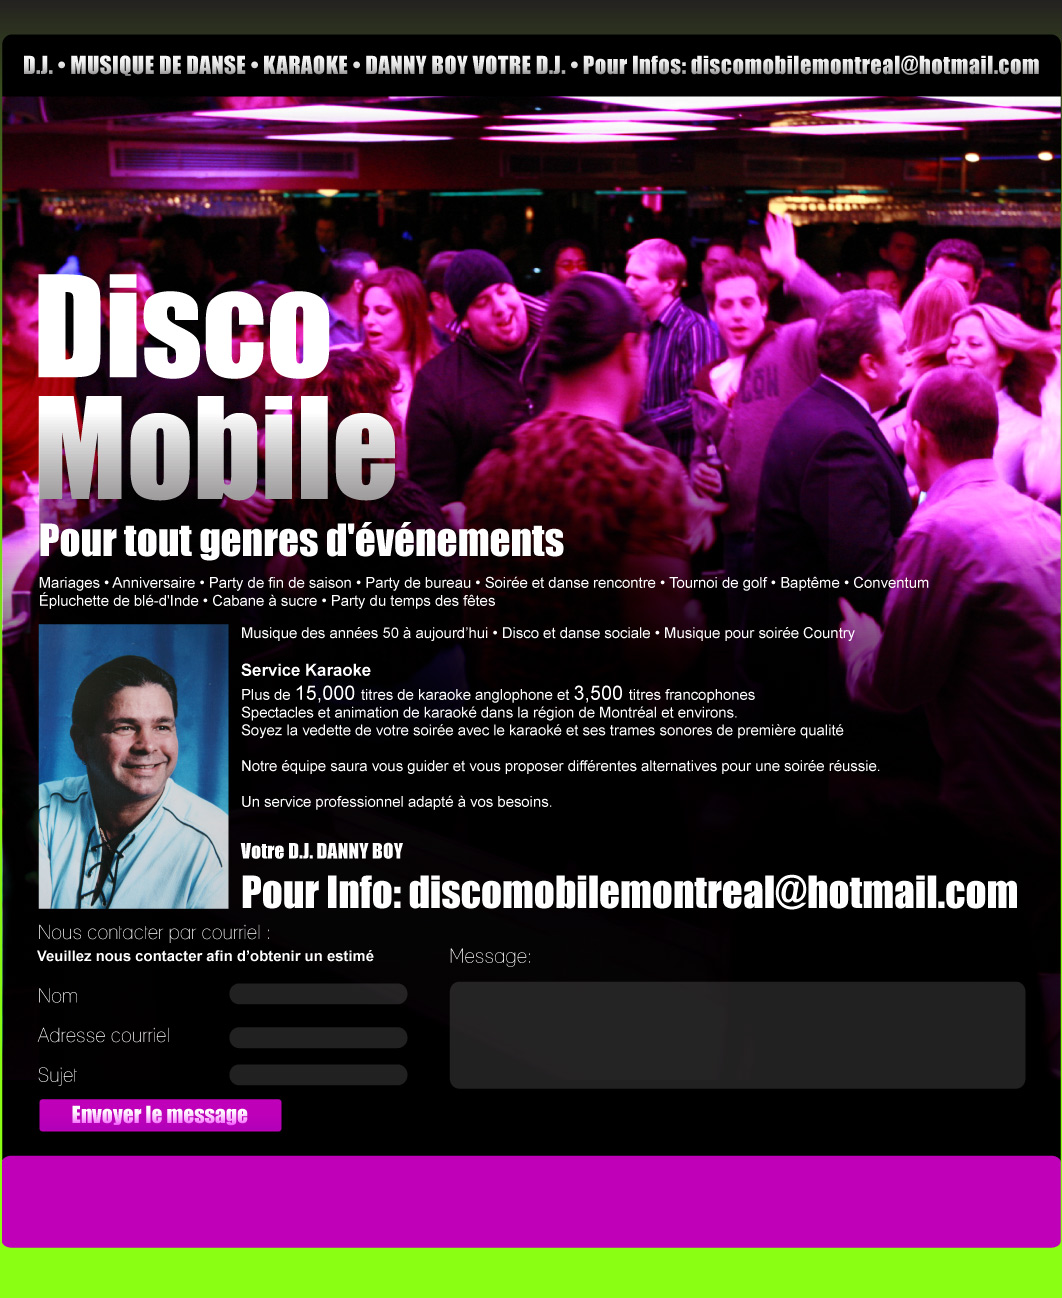 DJ. Danny Boy - Discotheque Mobile